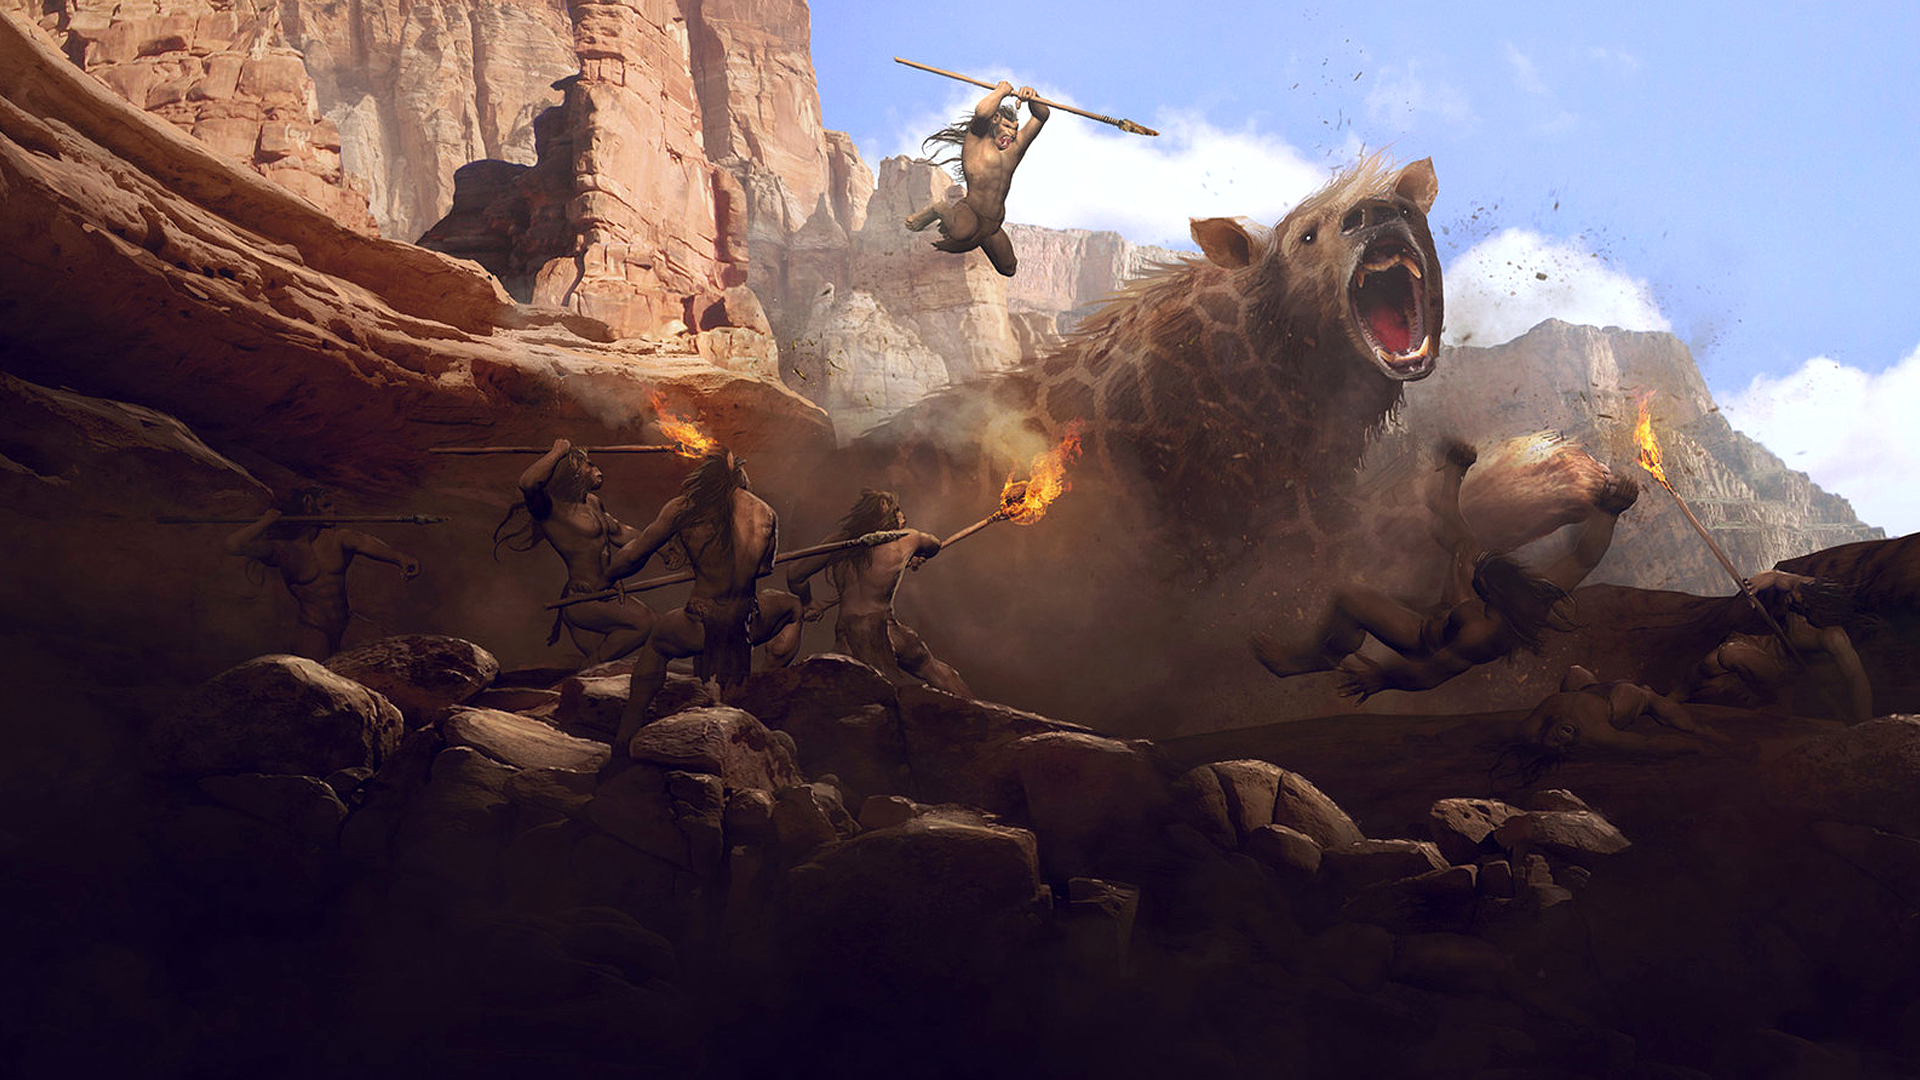 Guillem H Pongiluppi Artwork Digital Art Hyenas Giant Creature Spear Fire Torches Battle Mountains P 1920x1080